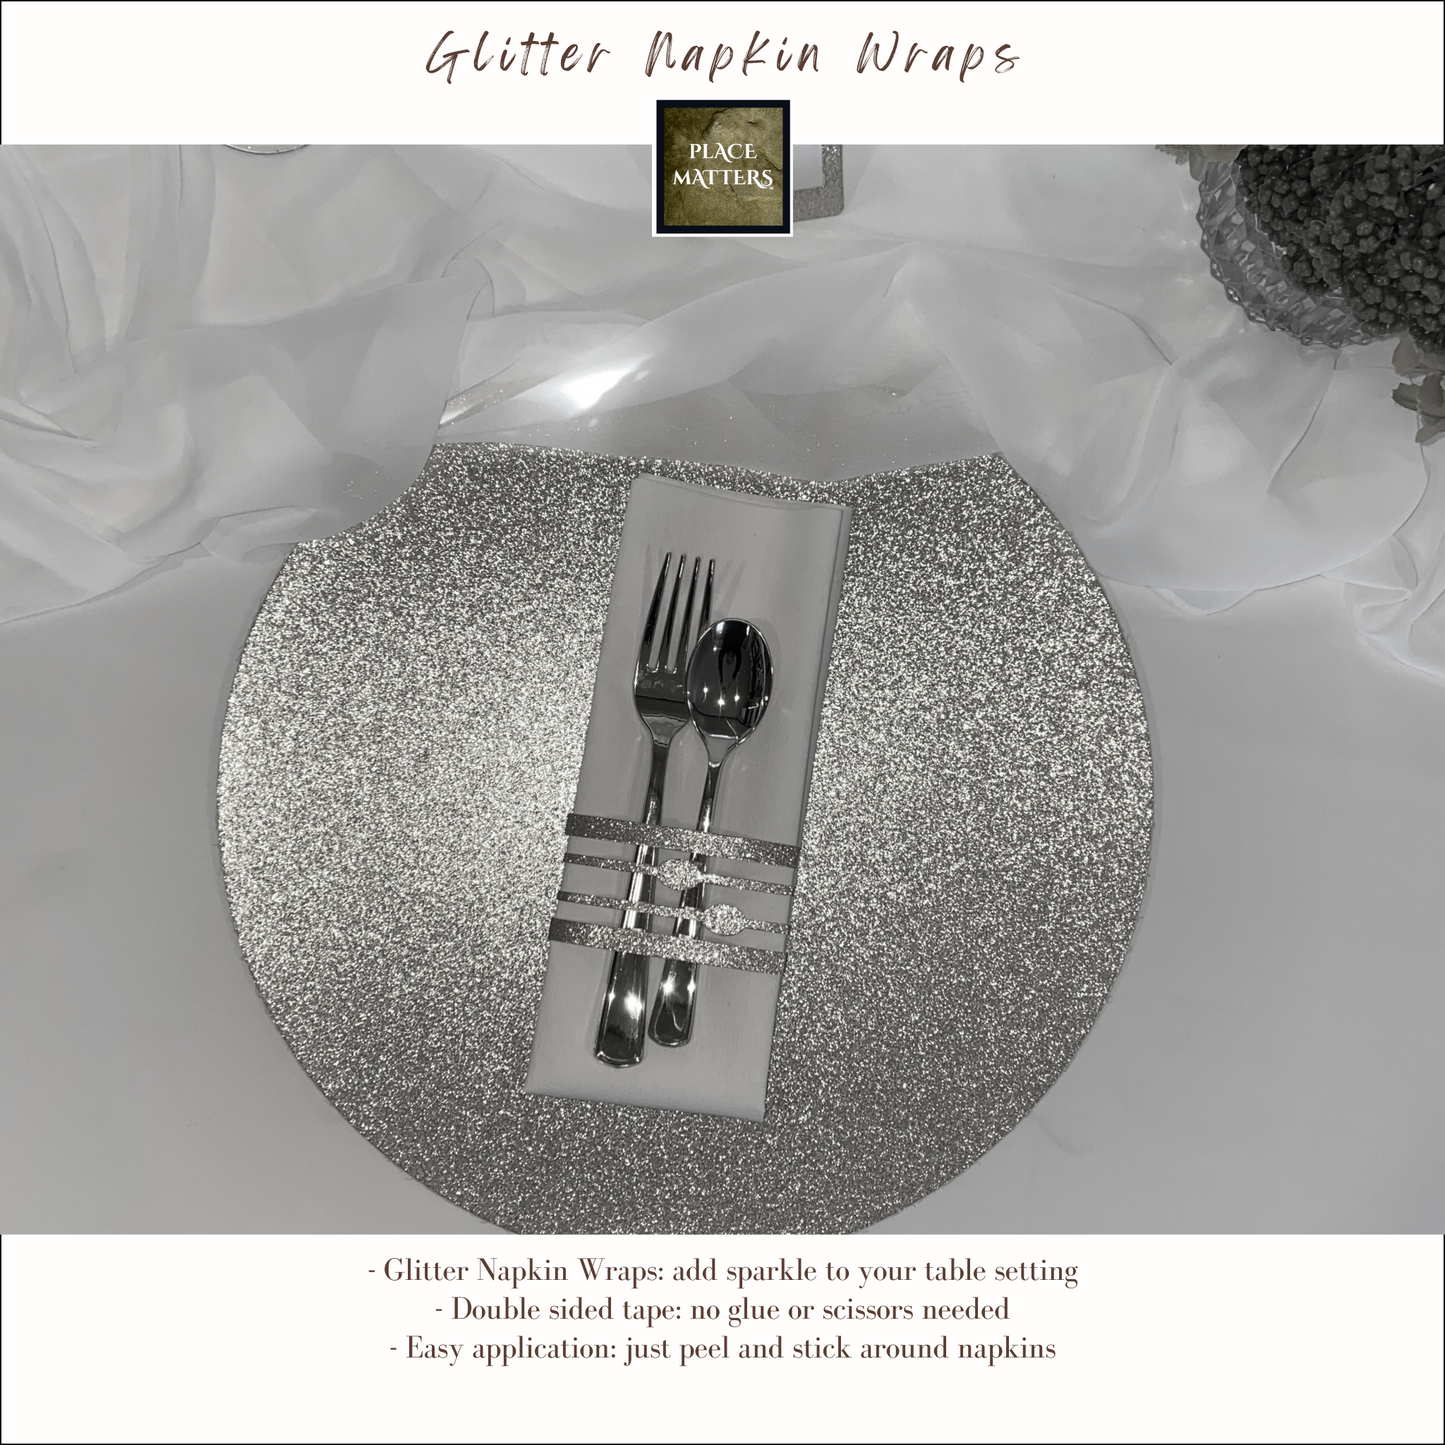 Silver Napkin Wraps (Droplets Design) - Place Matters